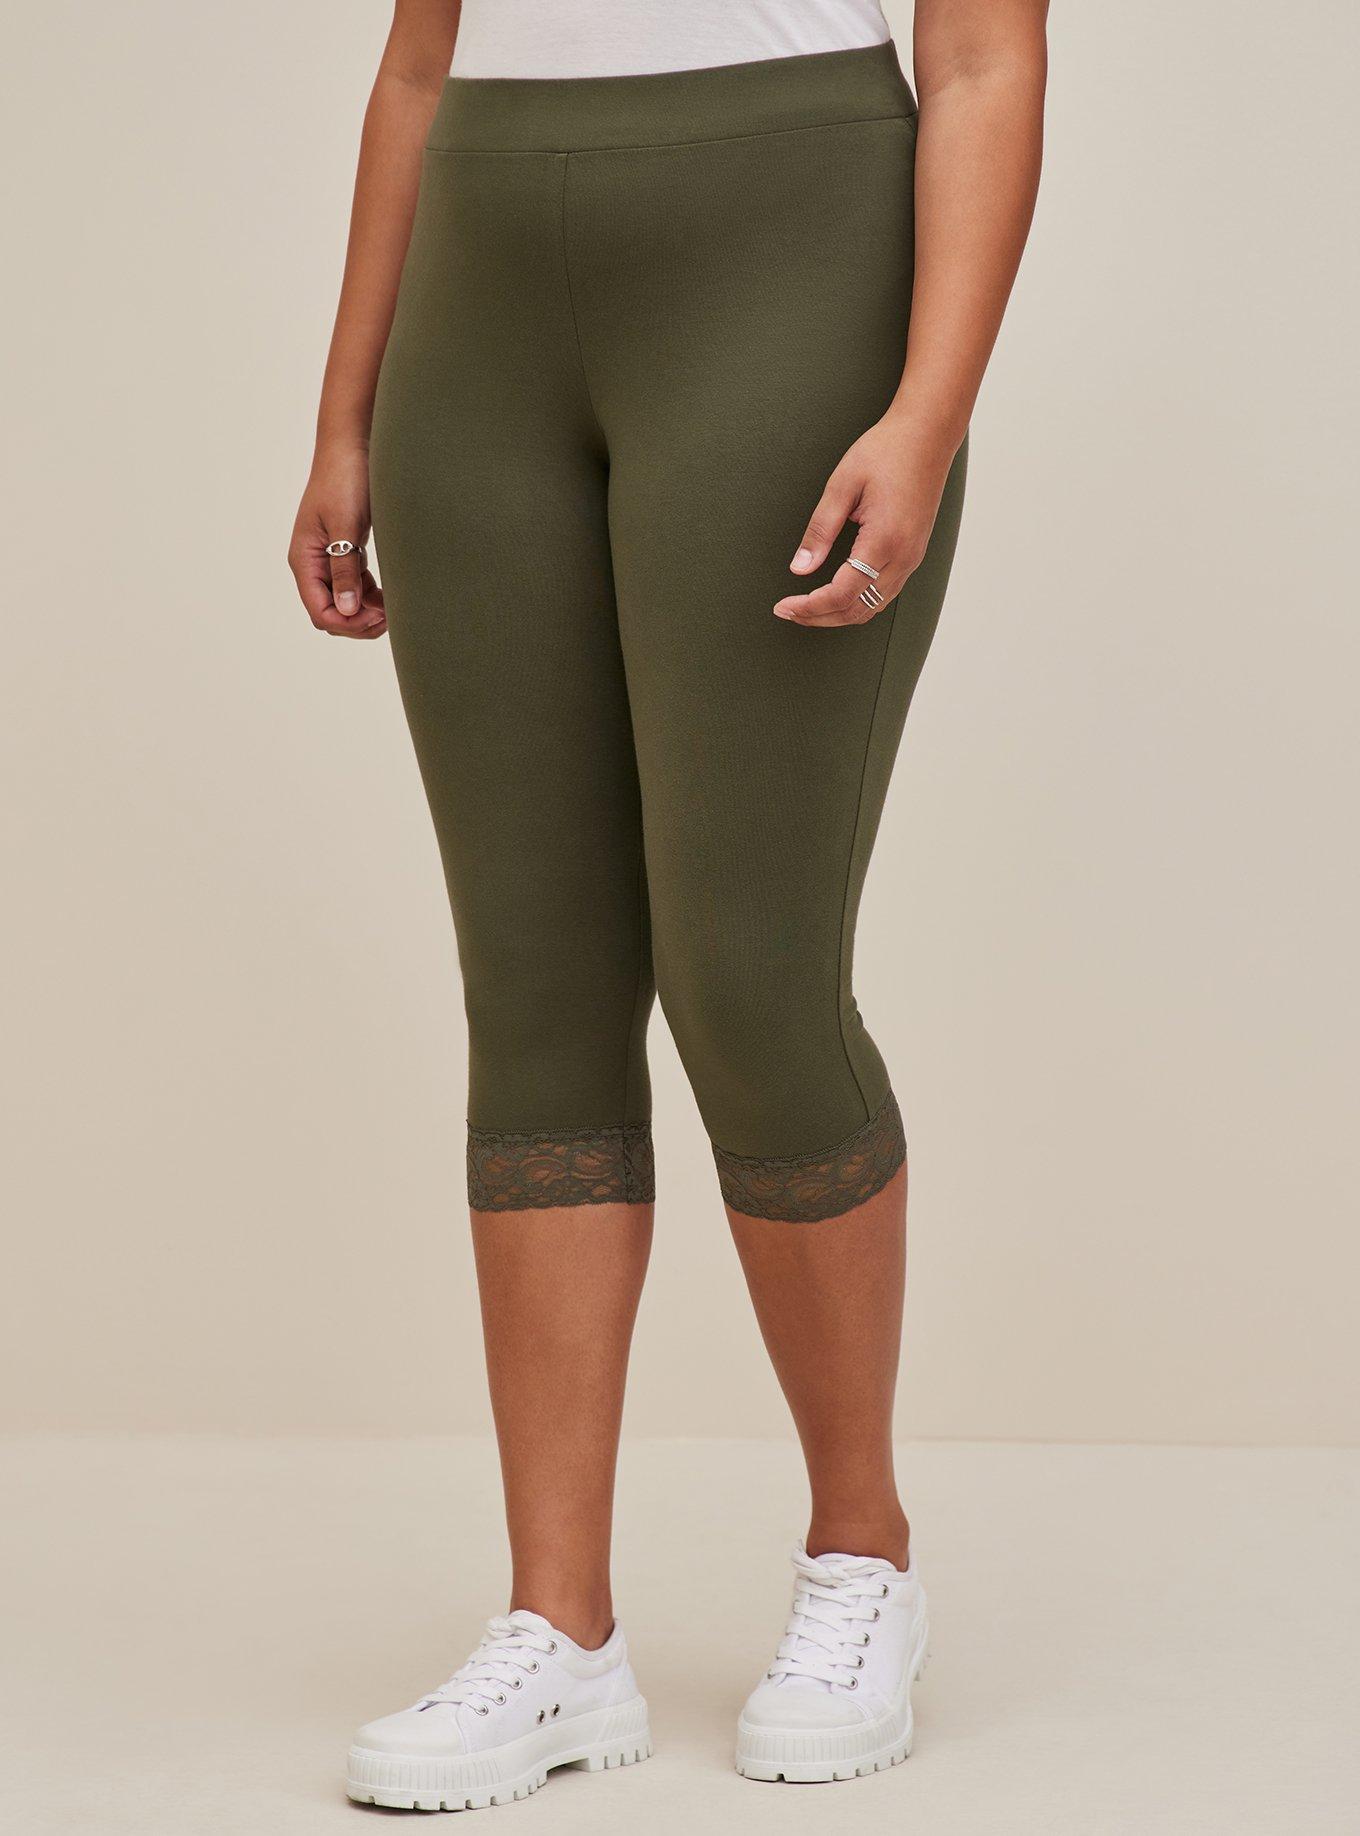 Torrid Leggings 1X (14-16) Olive Army Green Cropped Plus Size Capri Cotton  New